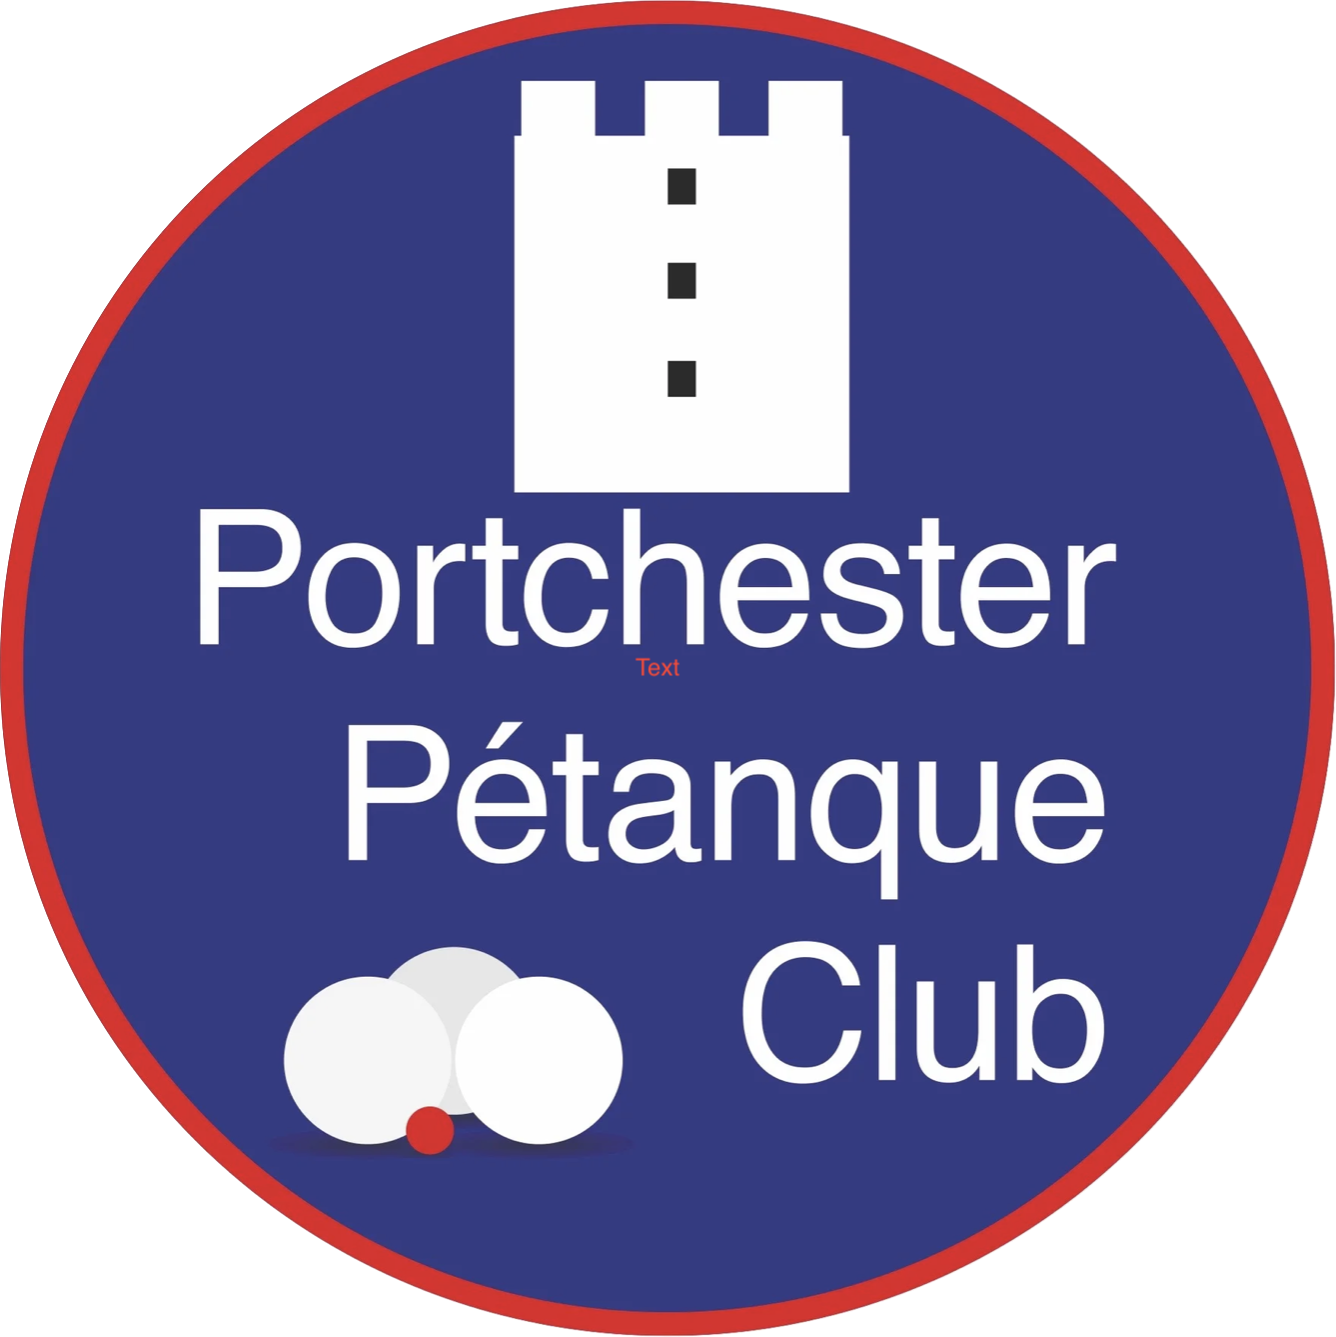 Portchester Petanque Club